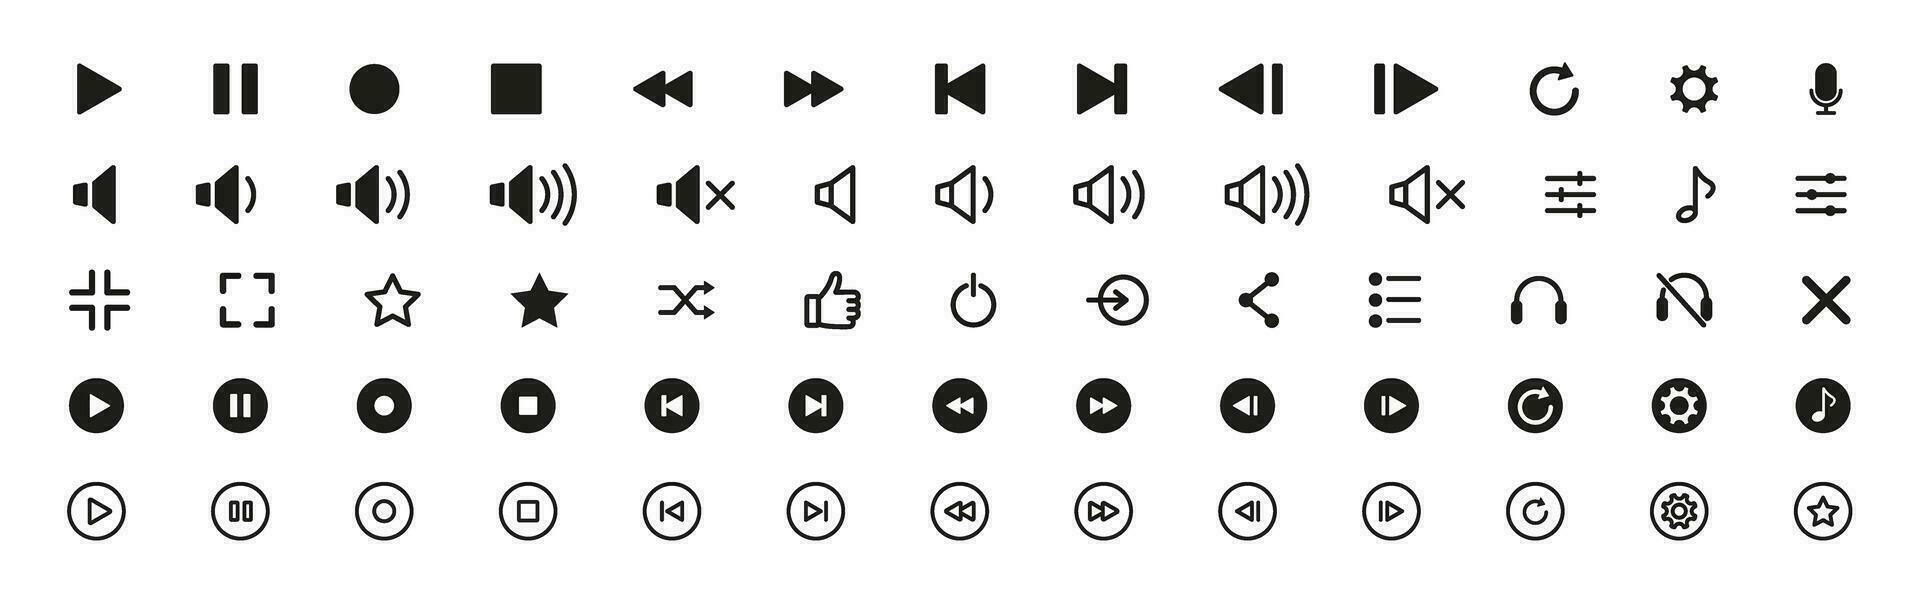 Media player icons set. Media player interface symbols set vector